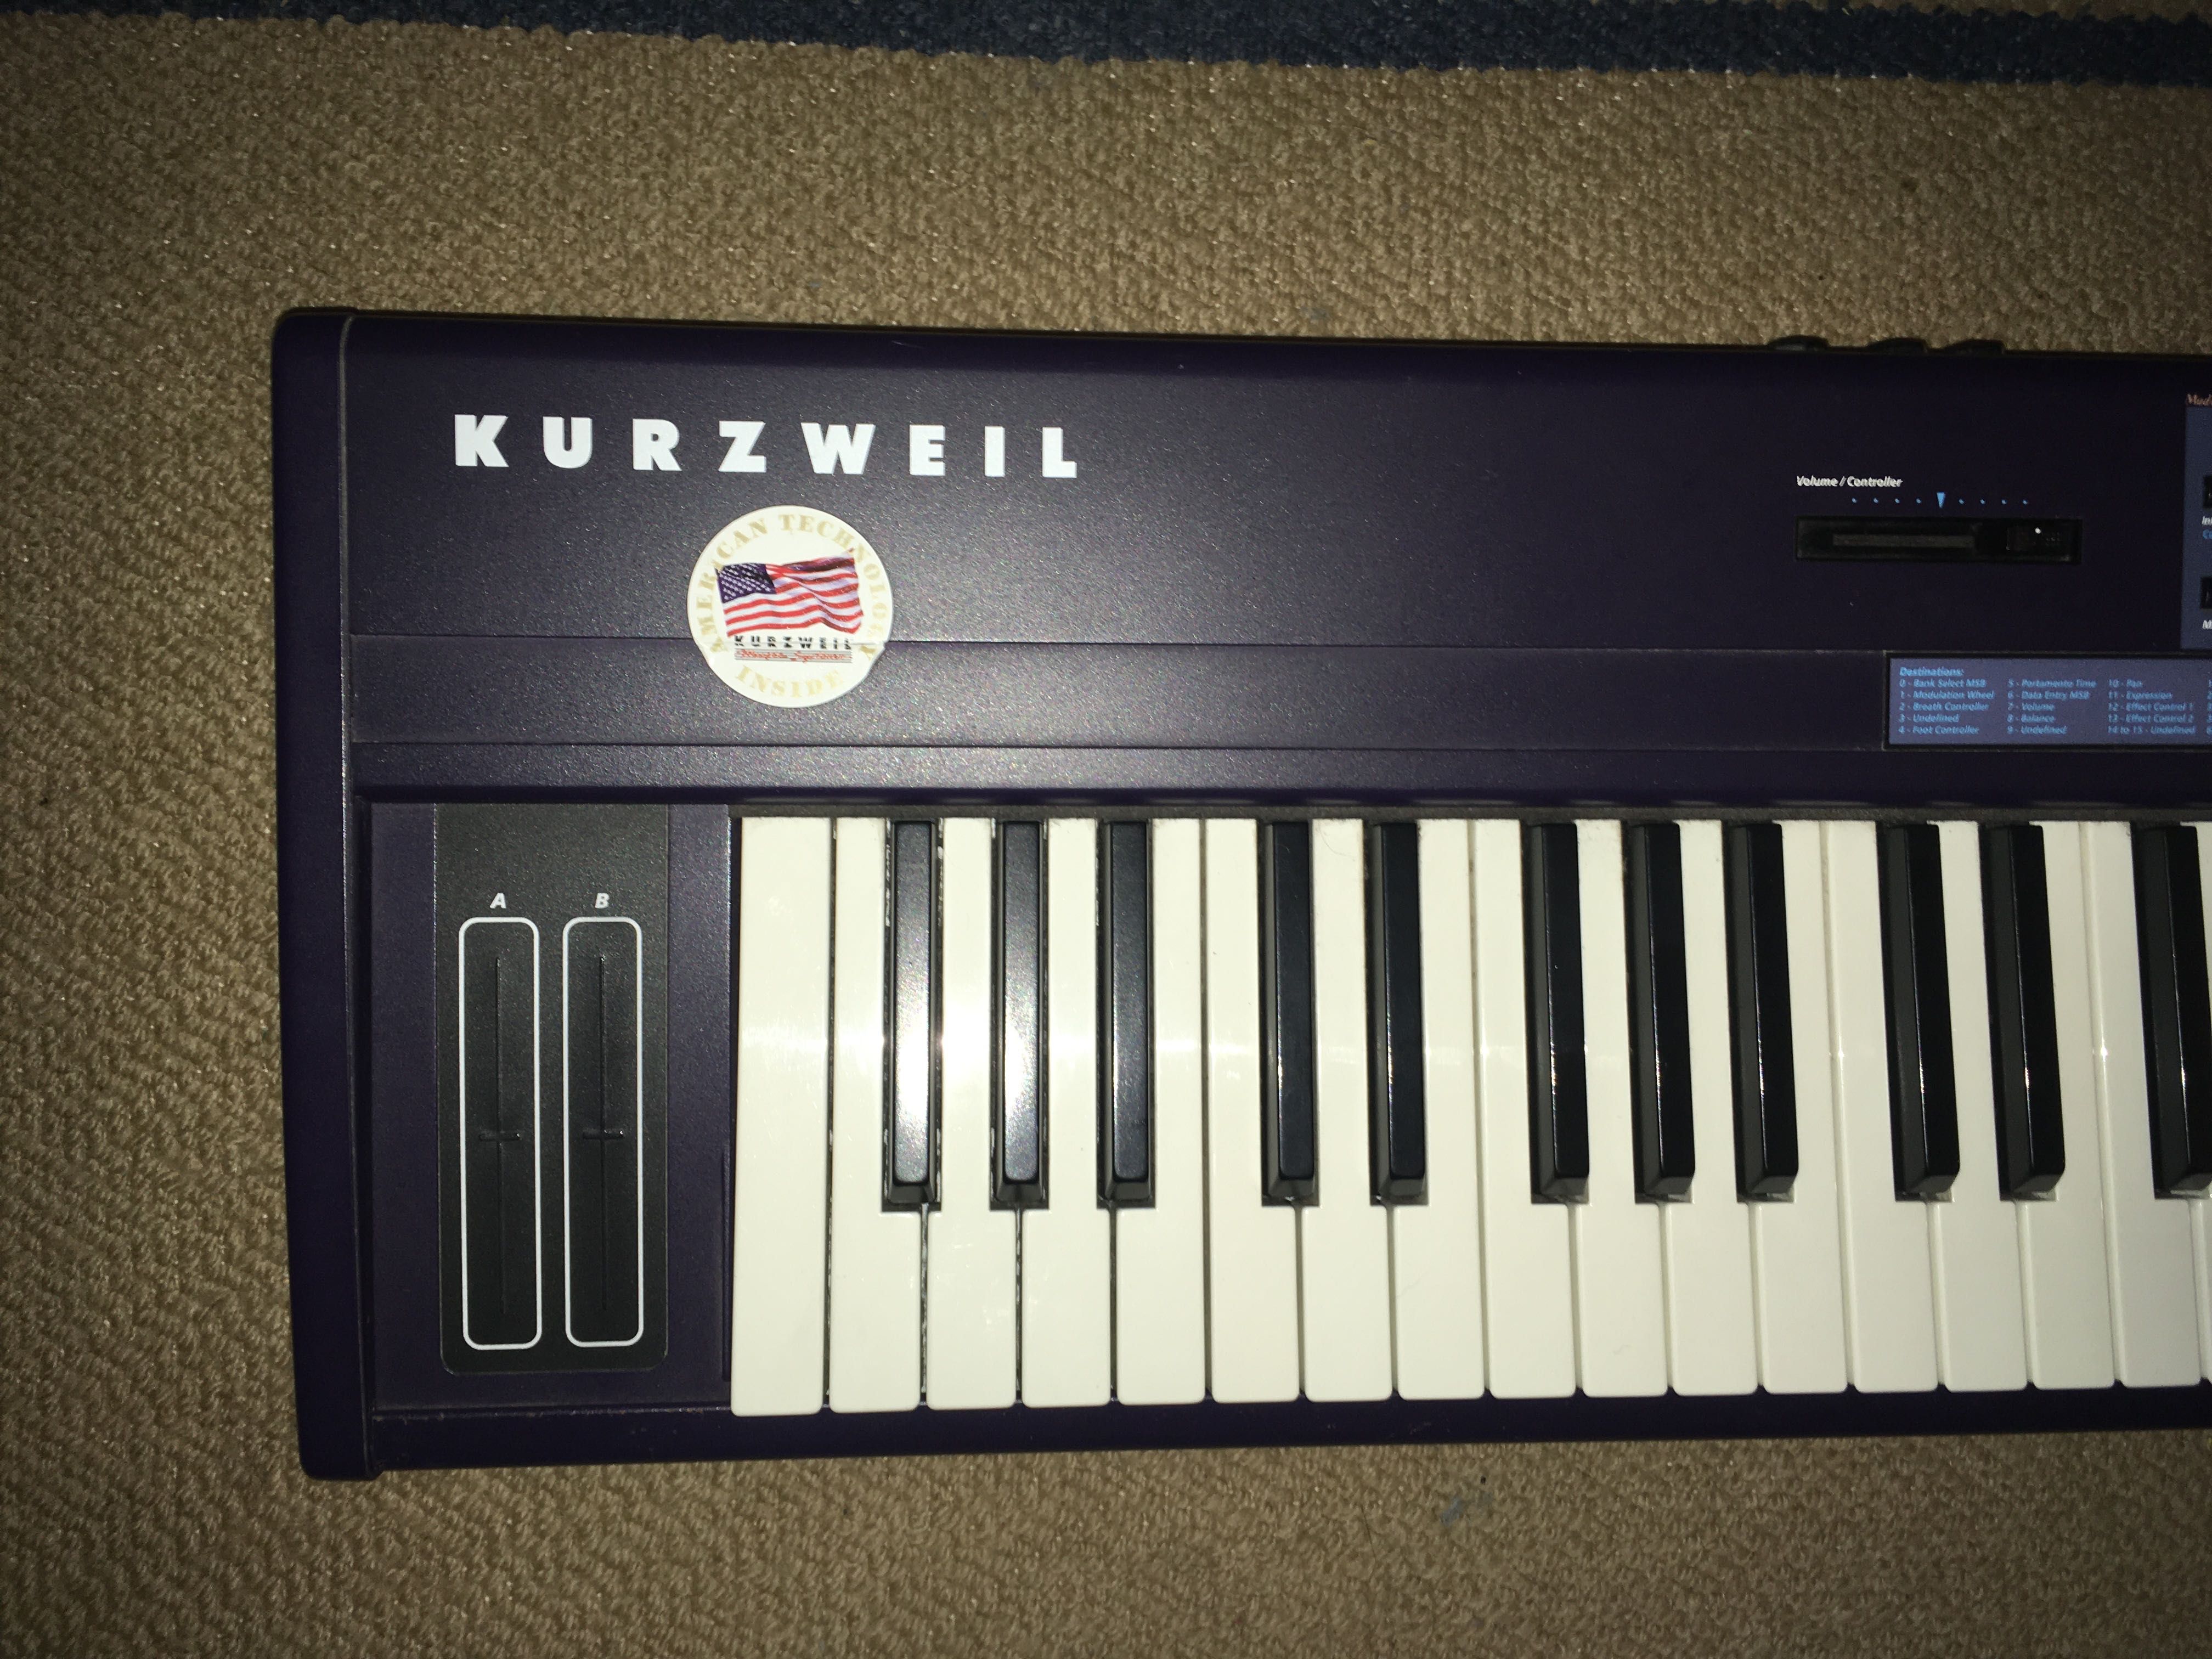 Kurzweill sp 76 com pedal sustain